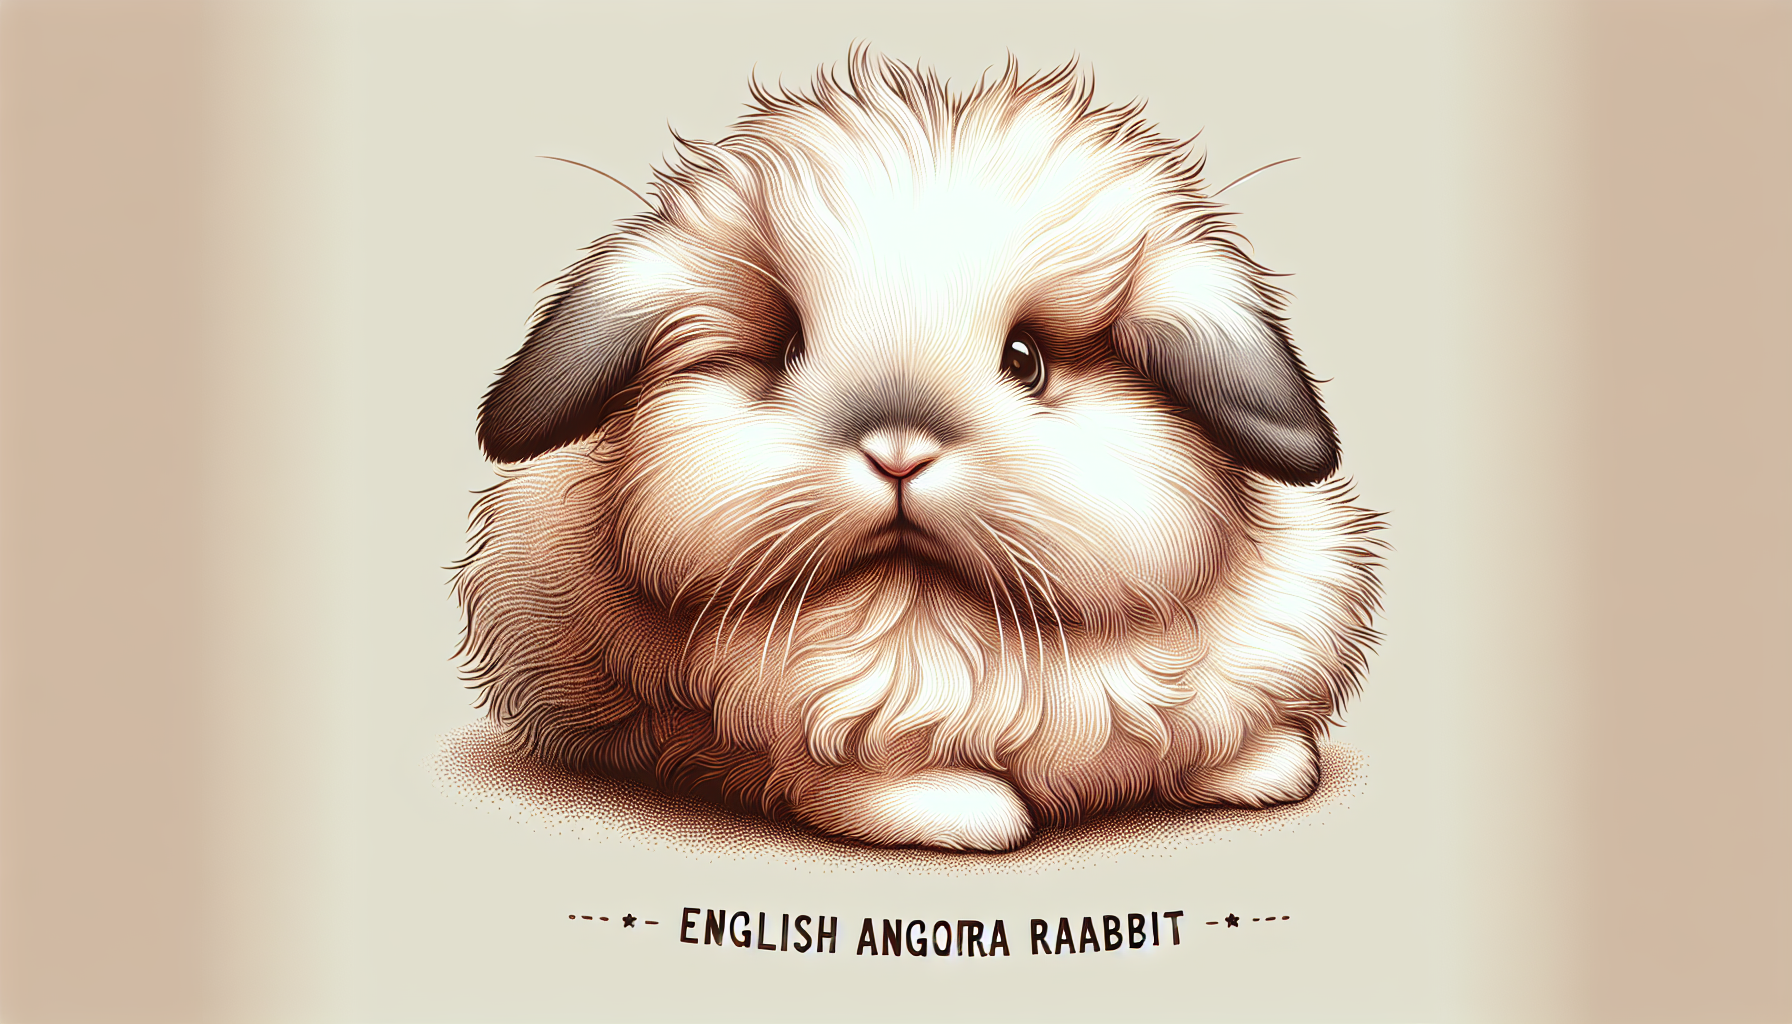 Are English Angora Rabbits Good Pets?